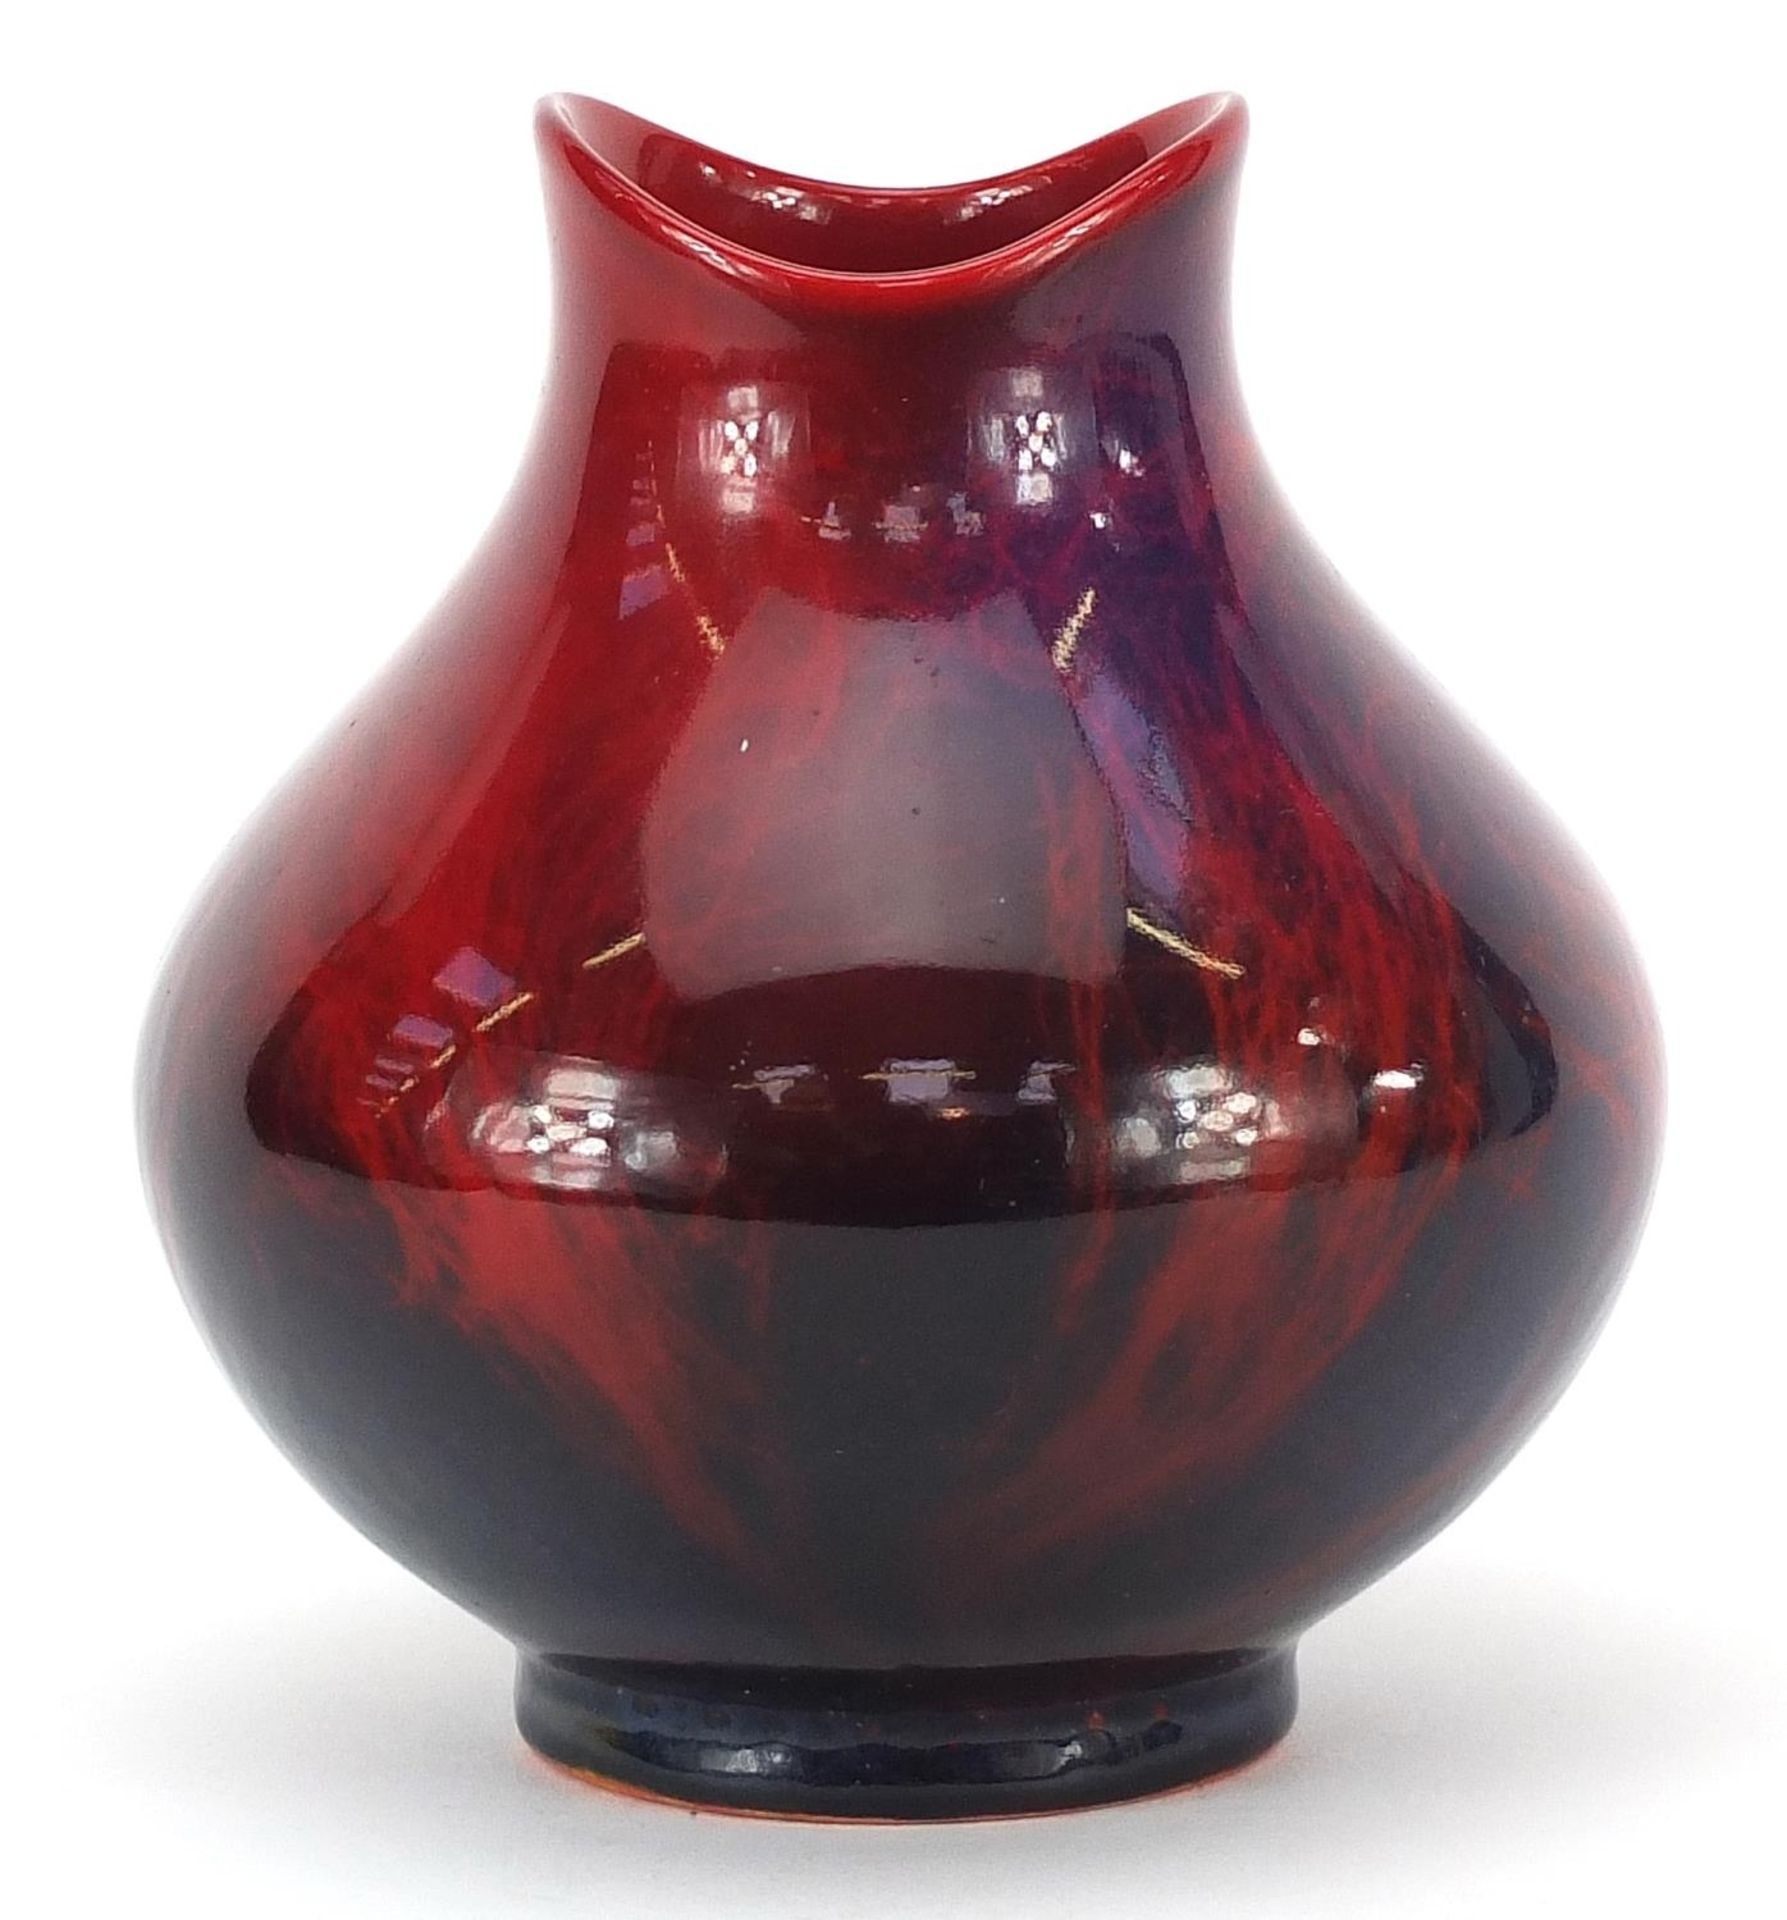 Royal Doulton flambe glazed vase, numbered 1605 to the base, 10.5cm high